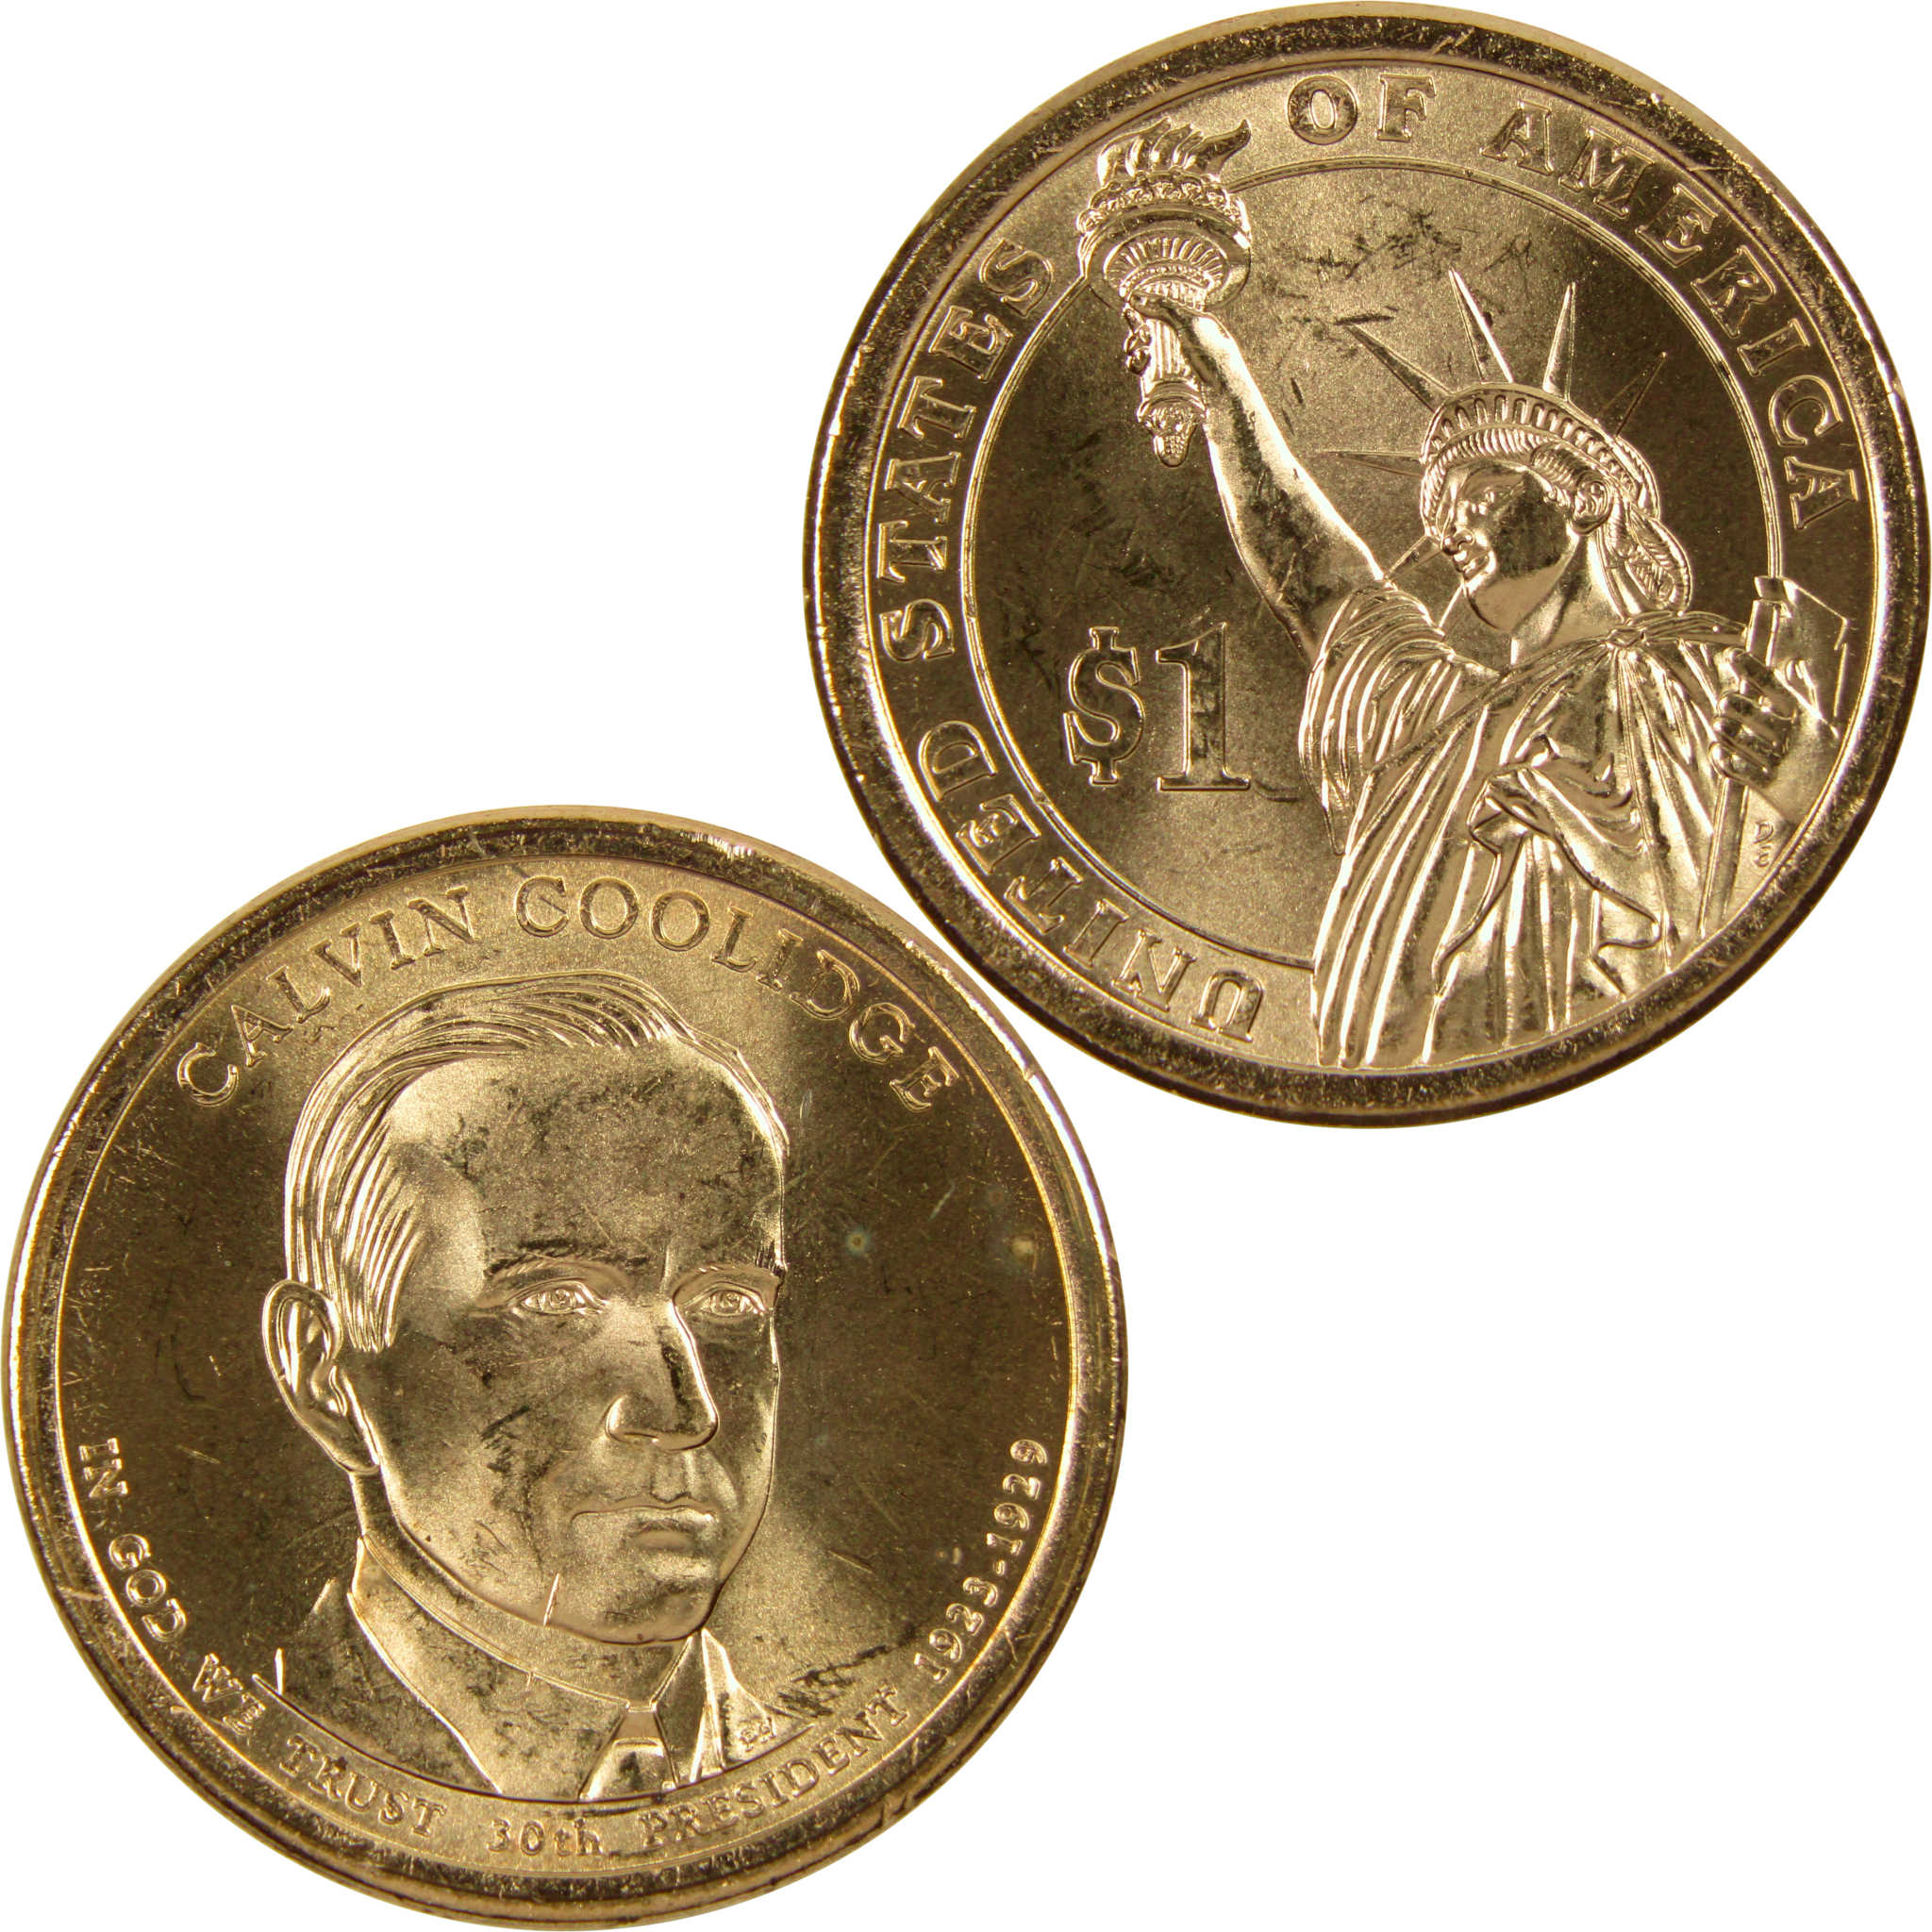 2014 P Calvin Coolidge Presidential Dollar BU Uncirculated $1 Coin